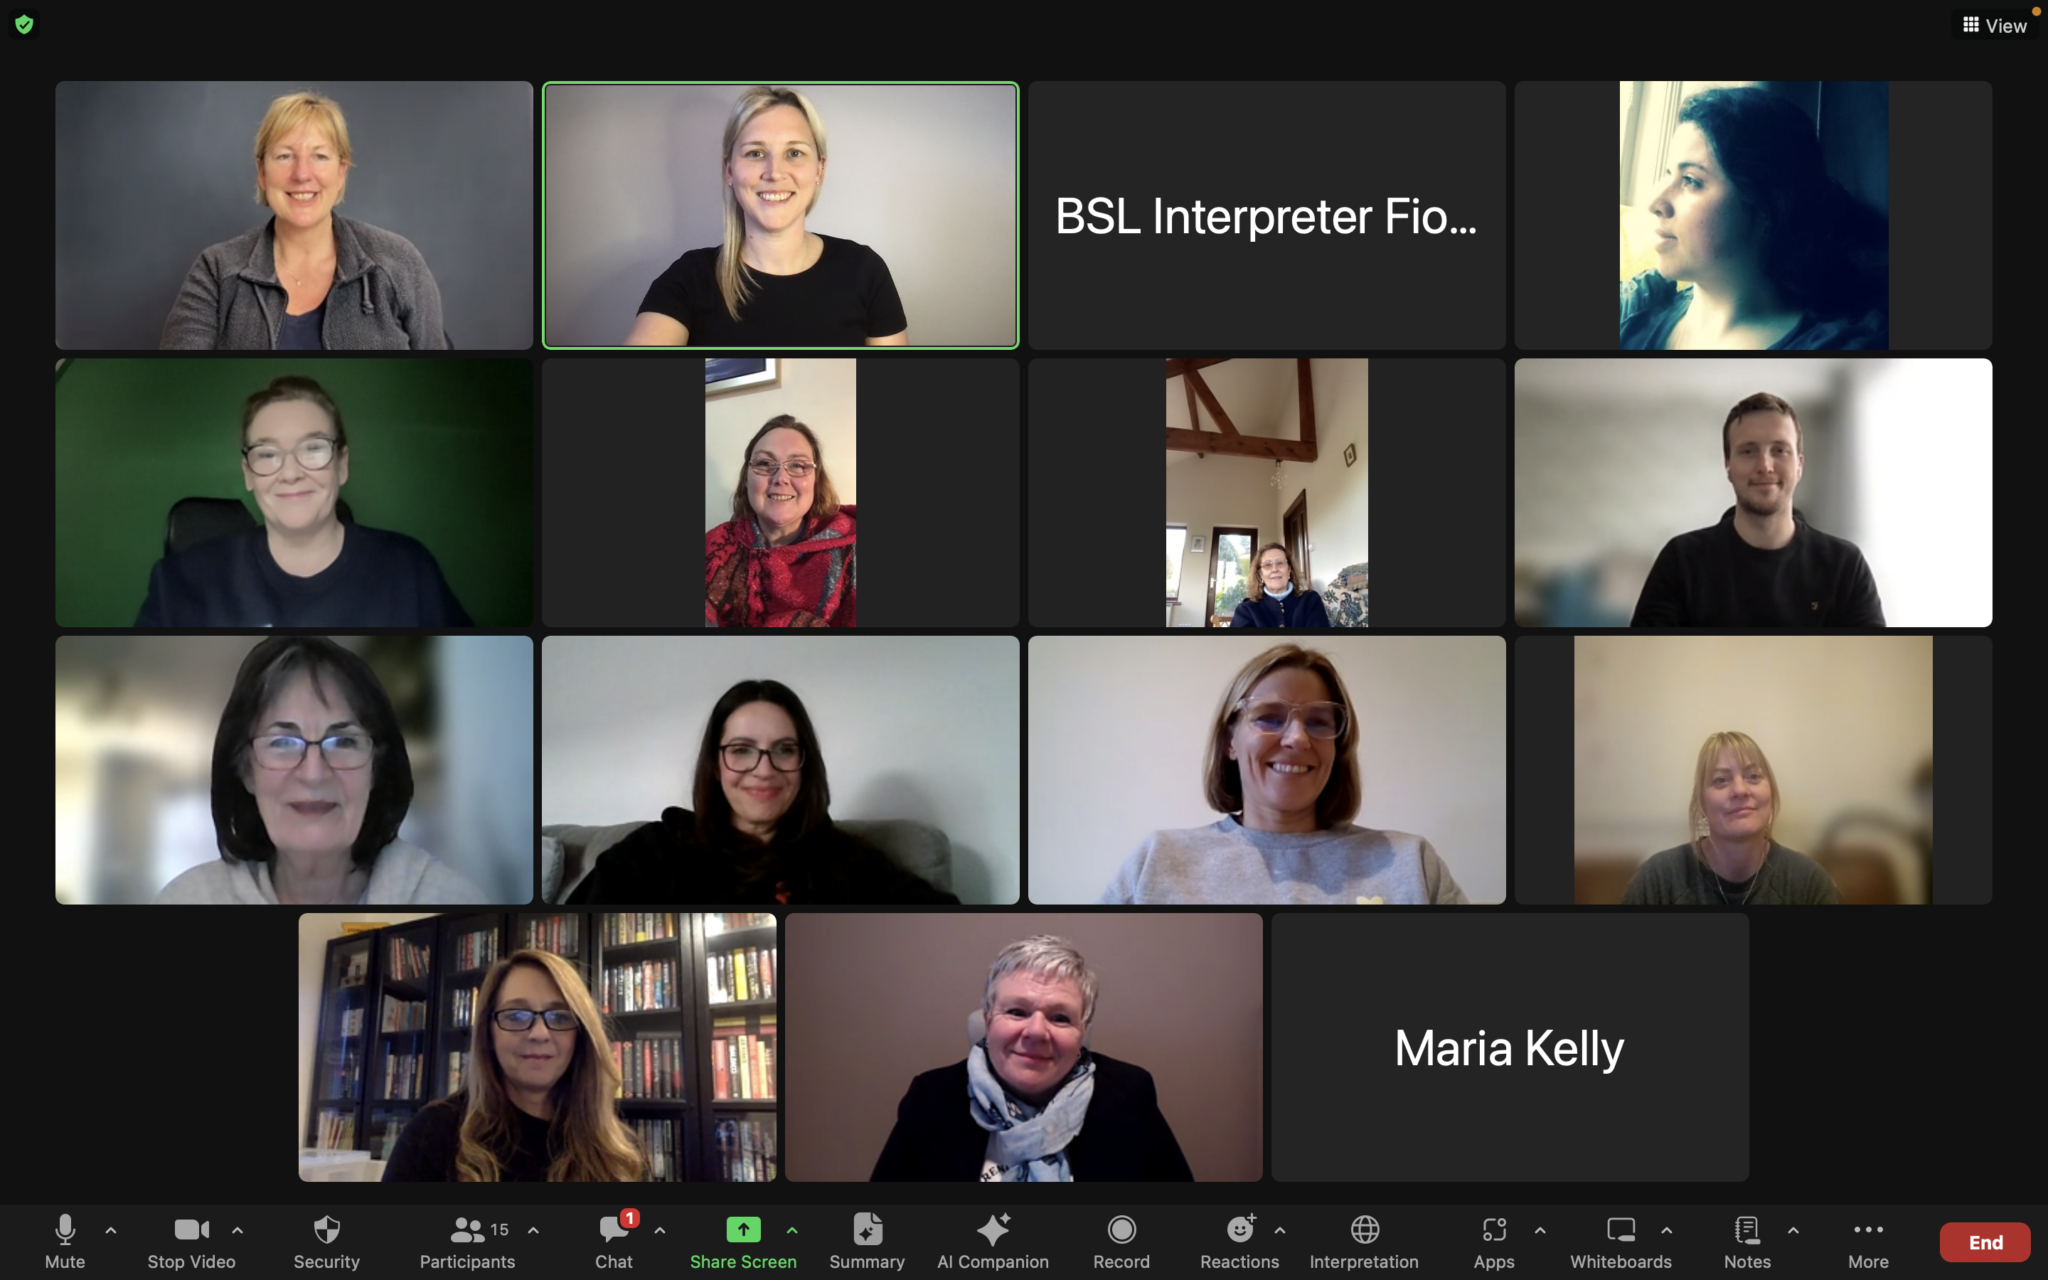 A screenshot of 15 people meeting online, using Zoom.